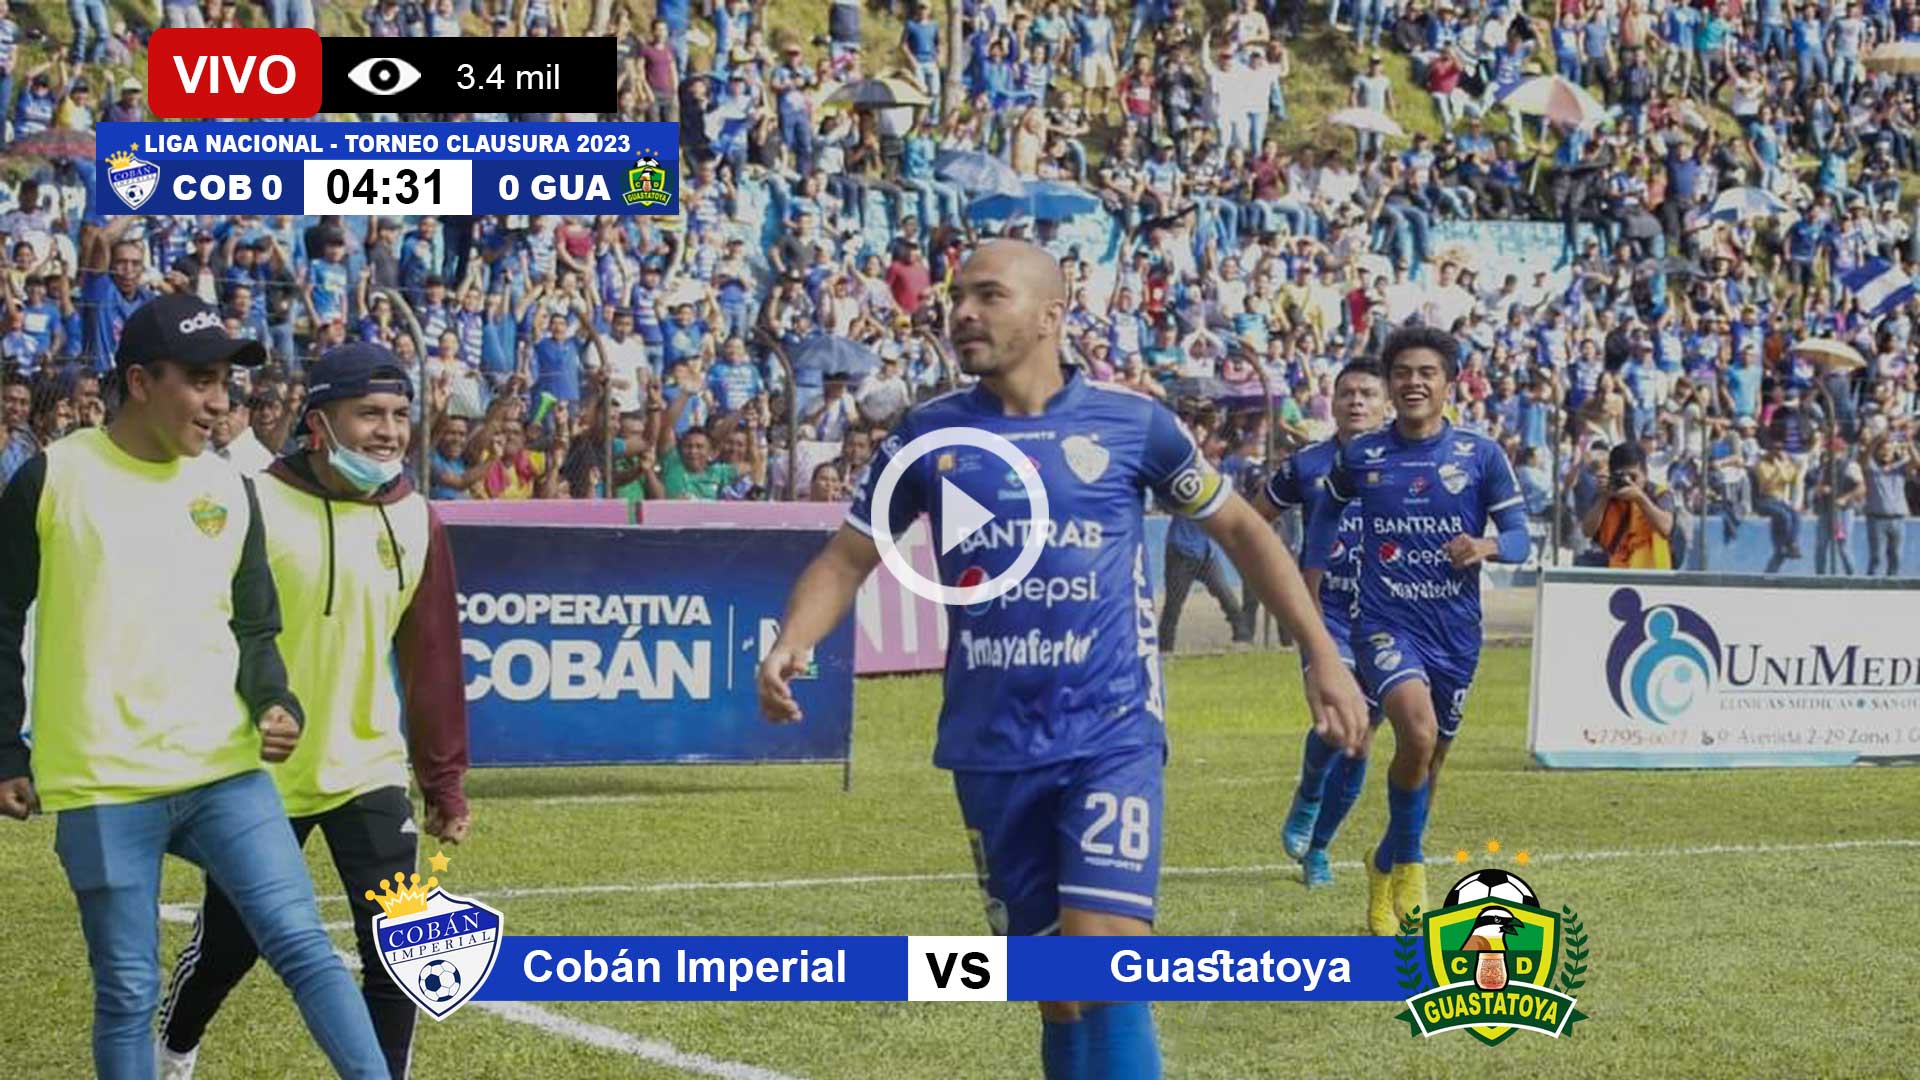 Cobán-Imperial-vs-Guastatoya-en-vivo-online-gratis-por-internet